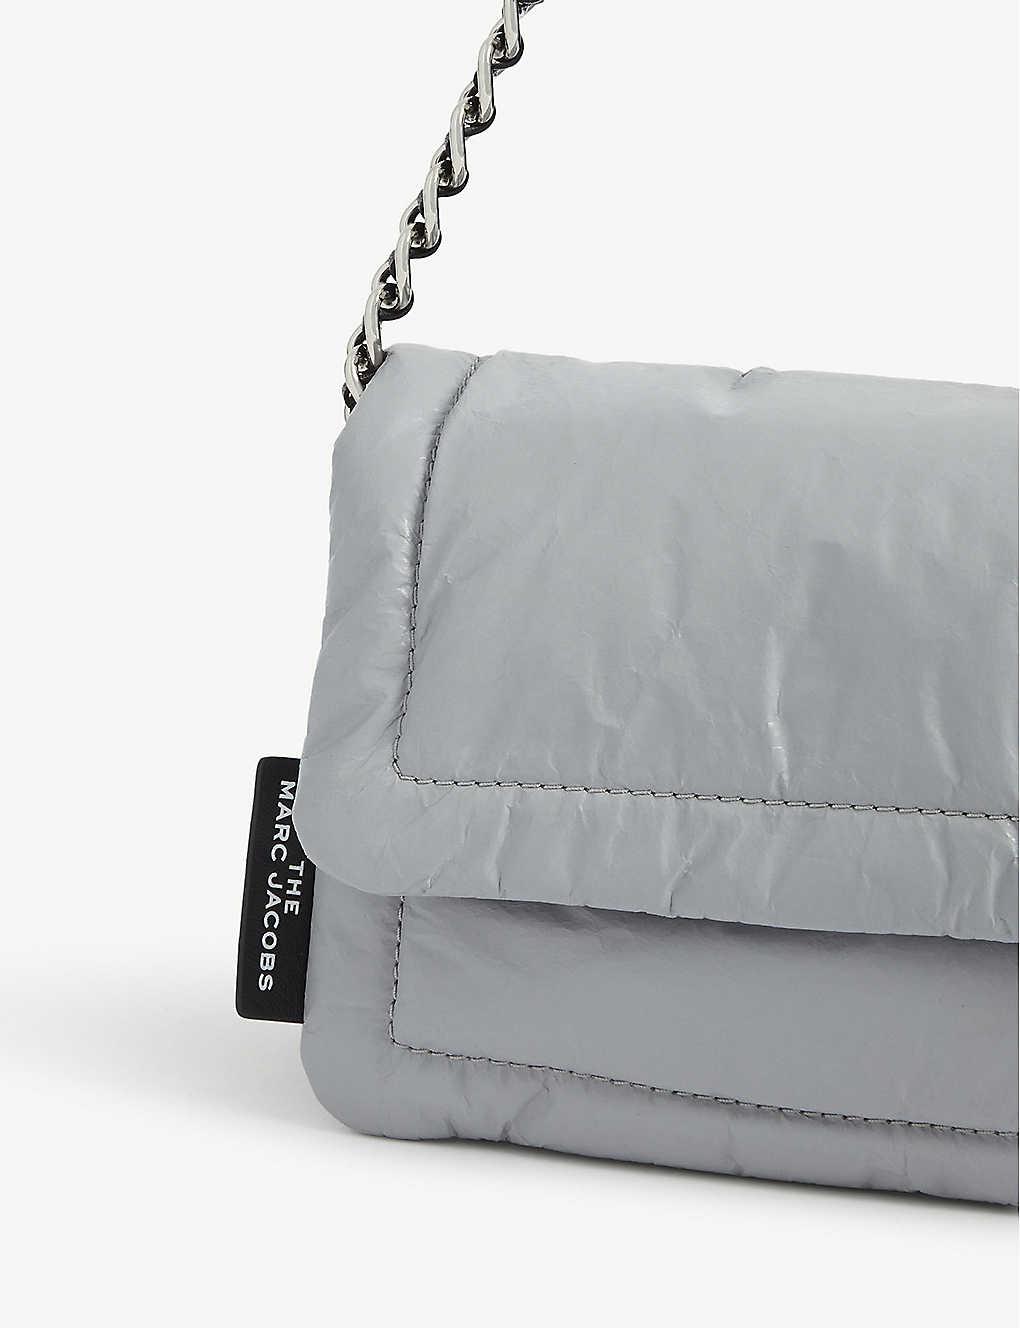 Marc Jacobs Pillow Bag Review —